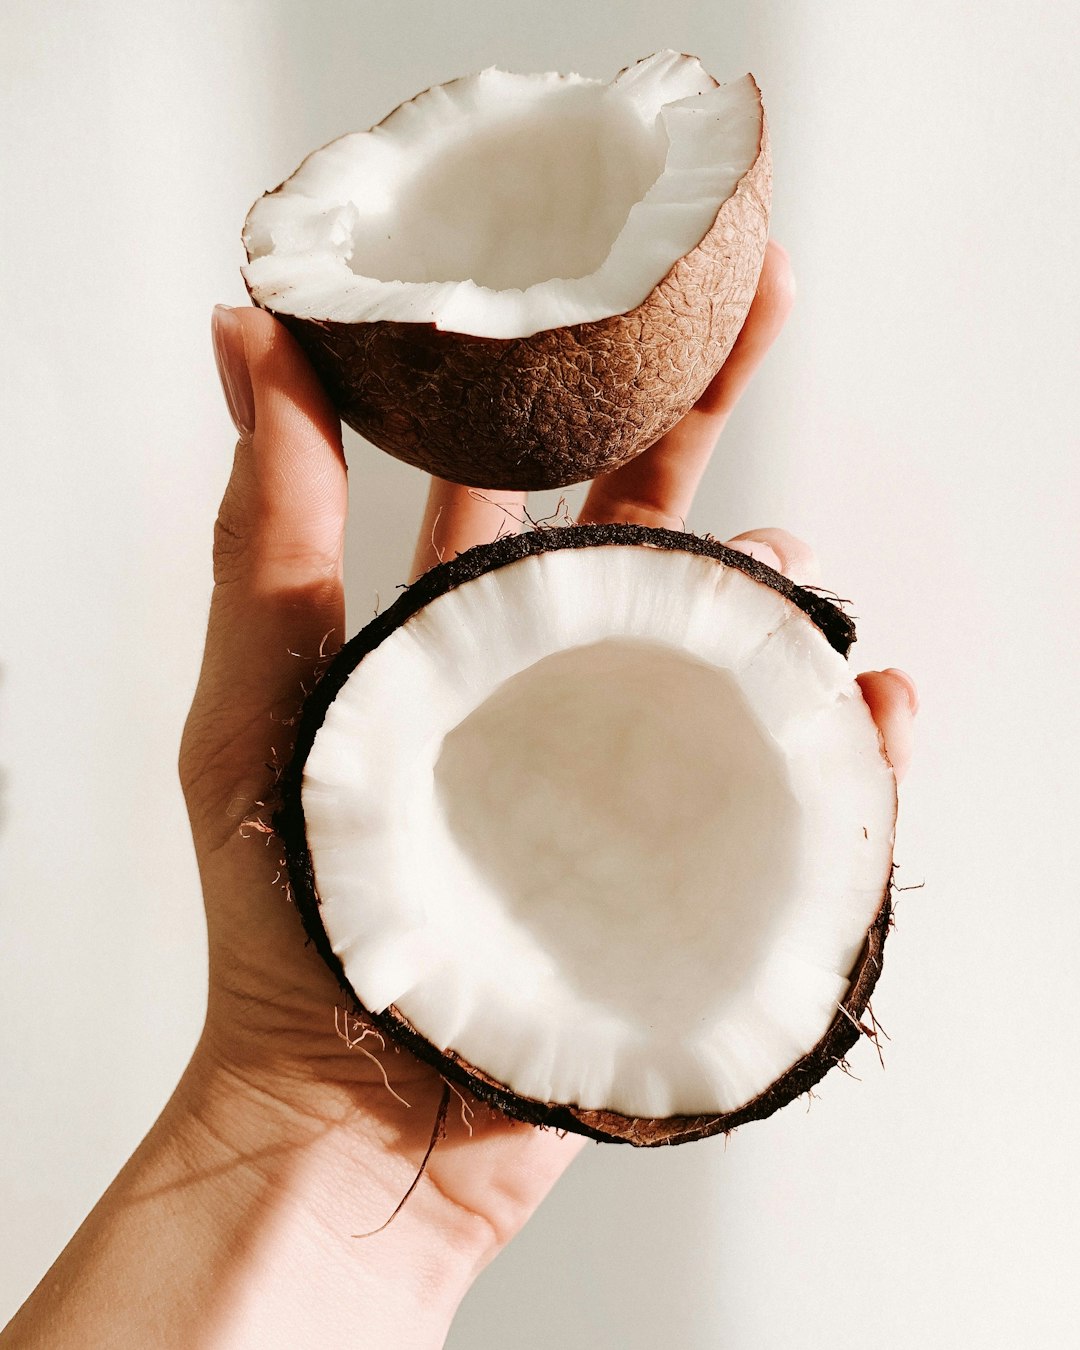 The history of coconut milk in traditional Hawaiian kava